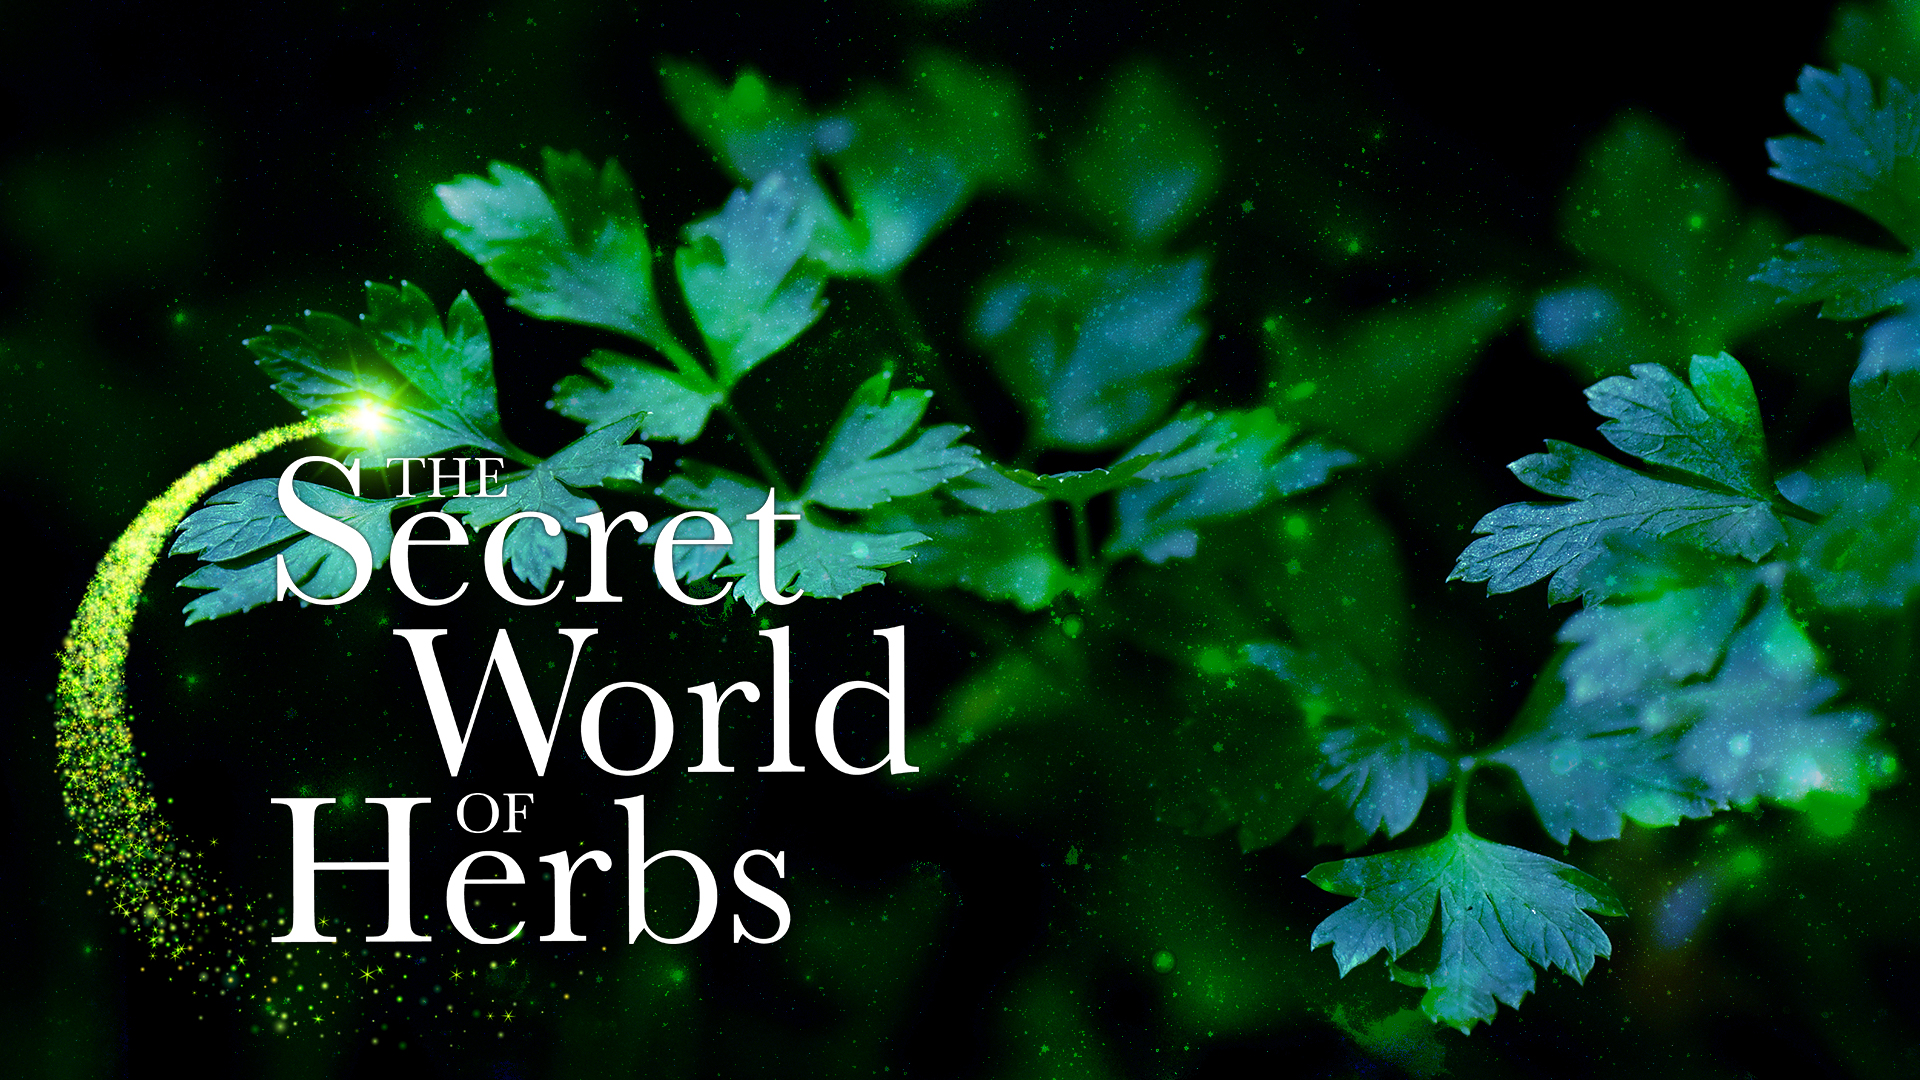 The Secret World of Herbs